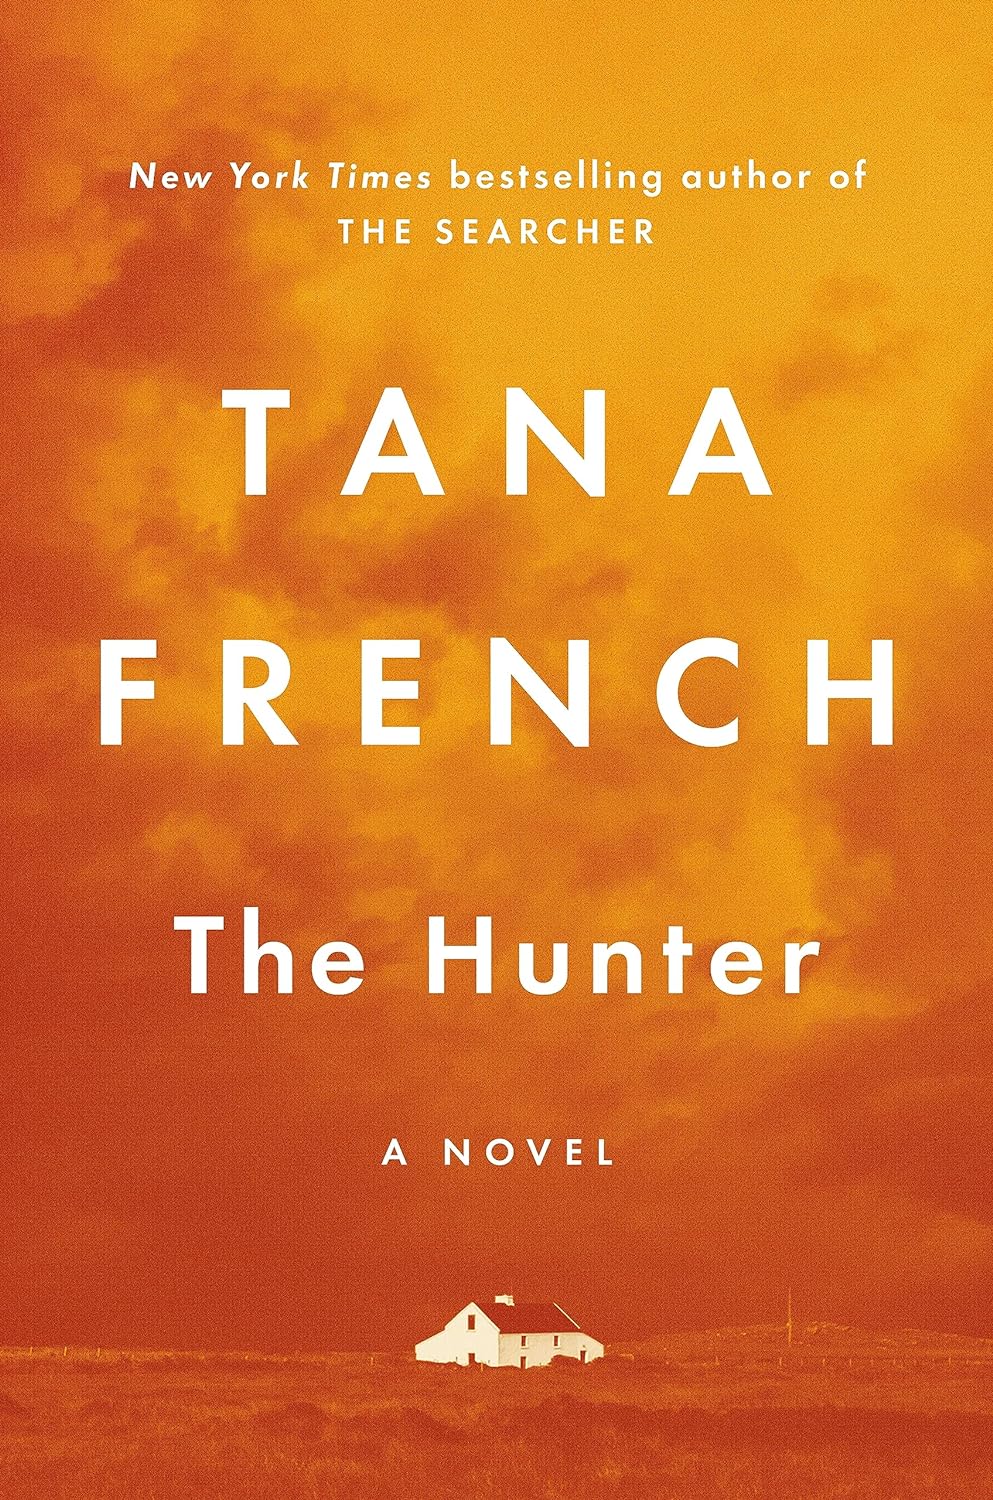 The Hunter: A Novel by Tana French